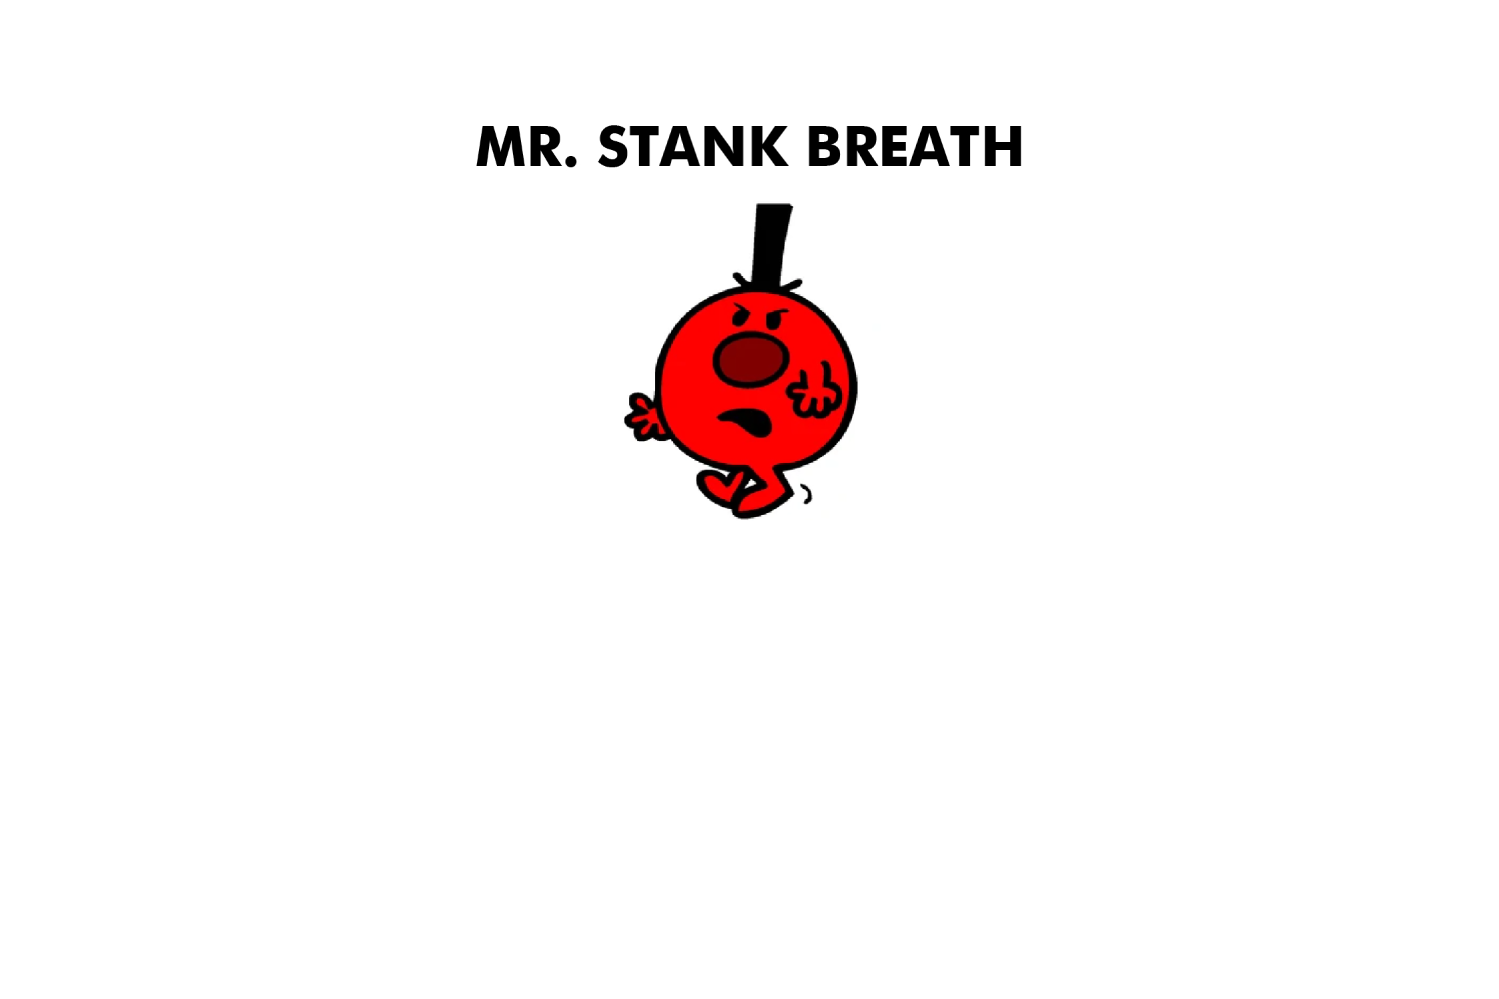 Mr. Stank Breath